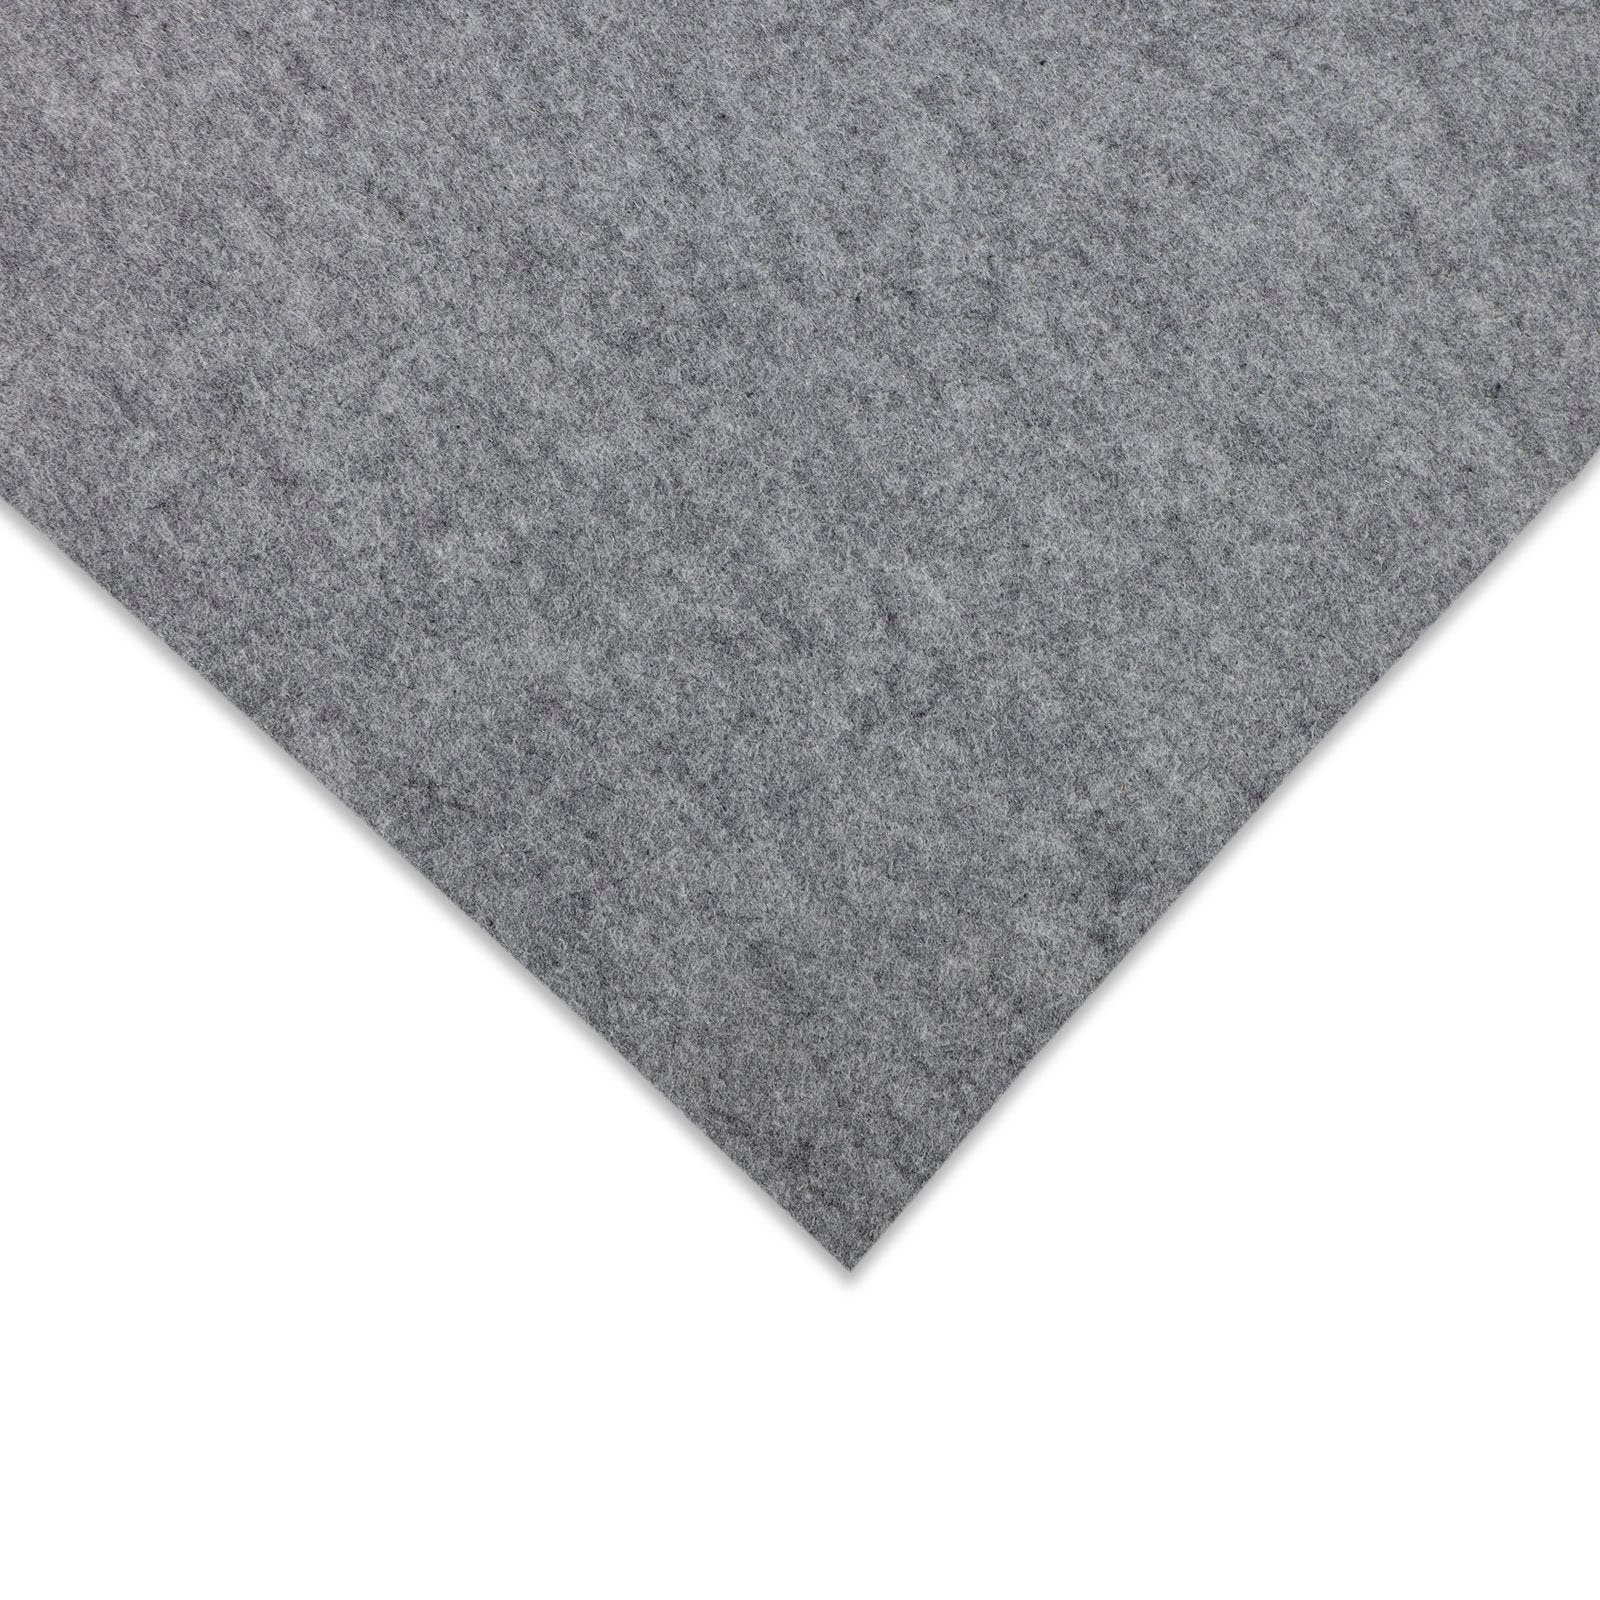 Grau Höhe: 4 home, Nadelfilz, my Größen Farben & verschiedene Superflex, Teppichboden rechteckig, mm,